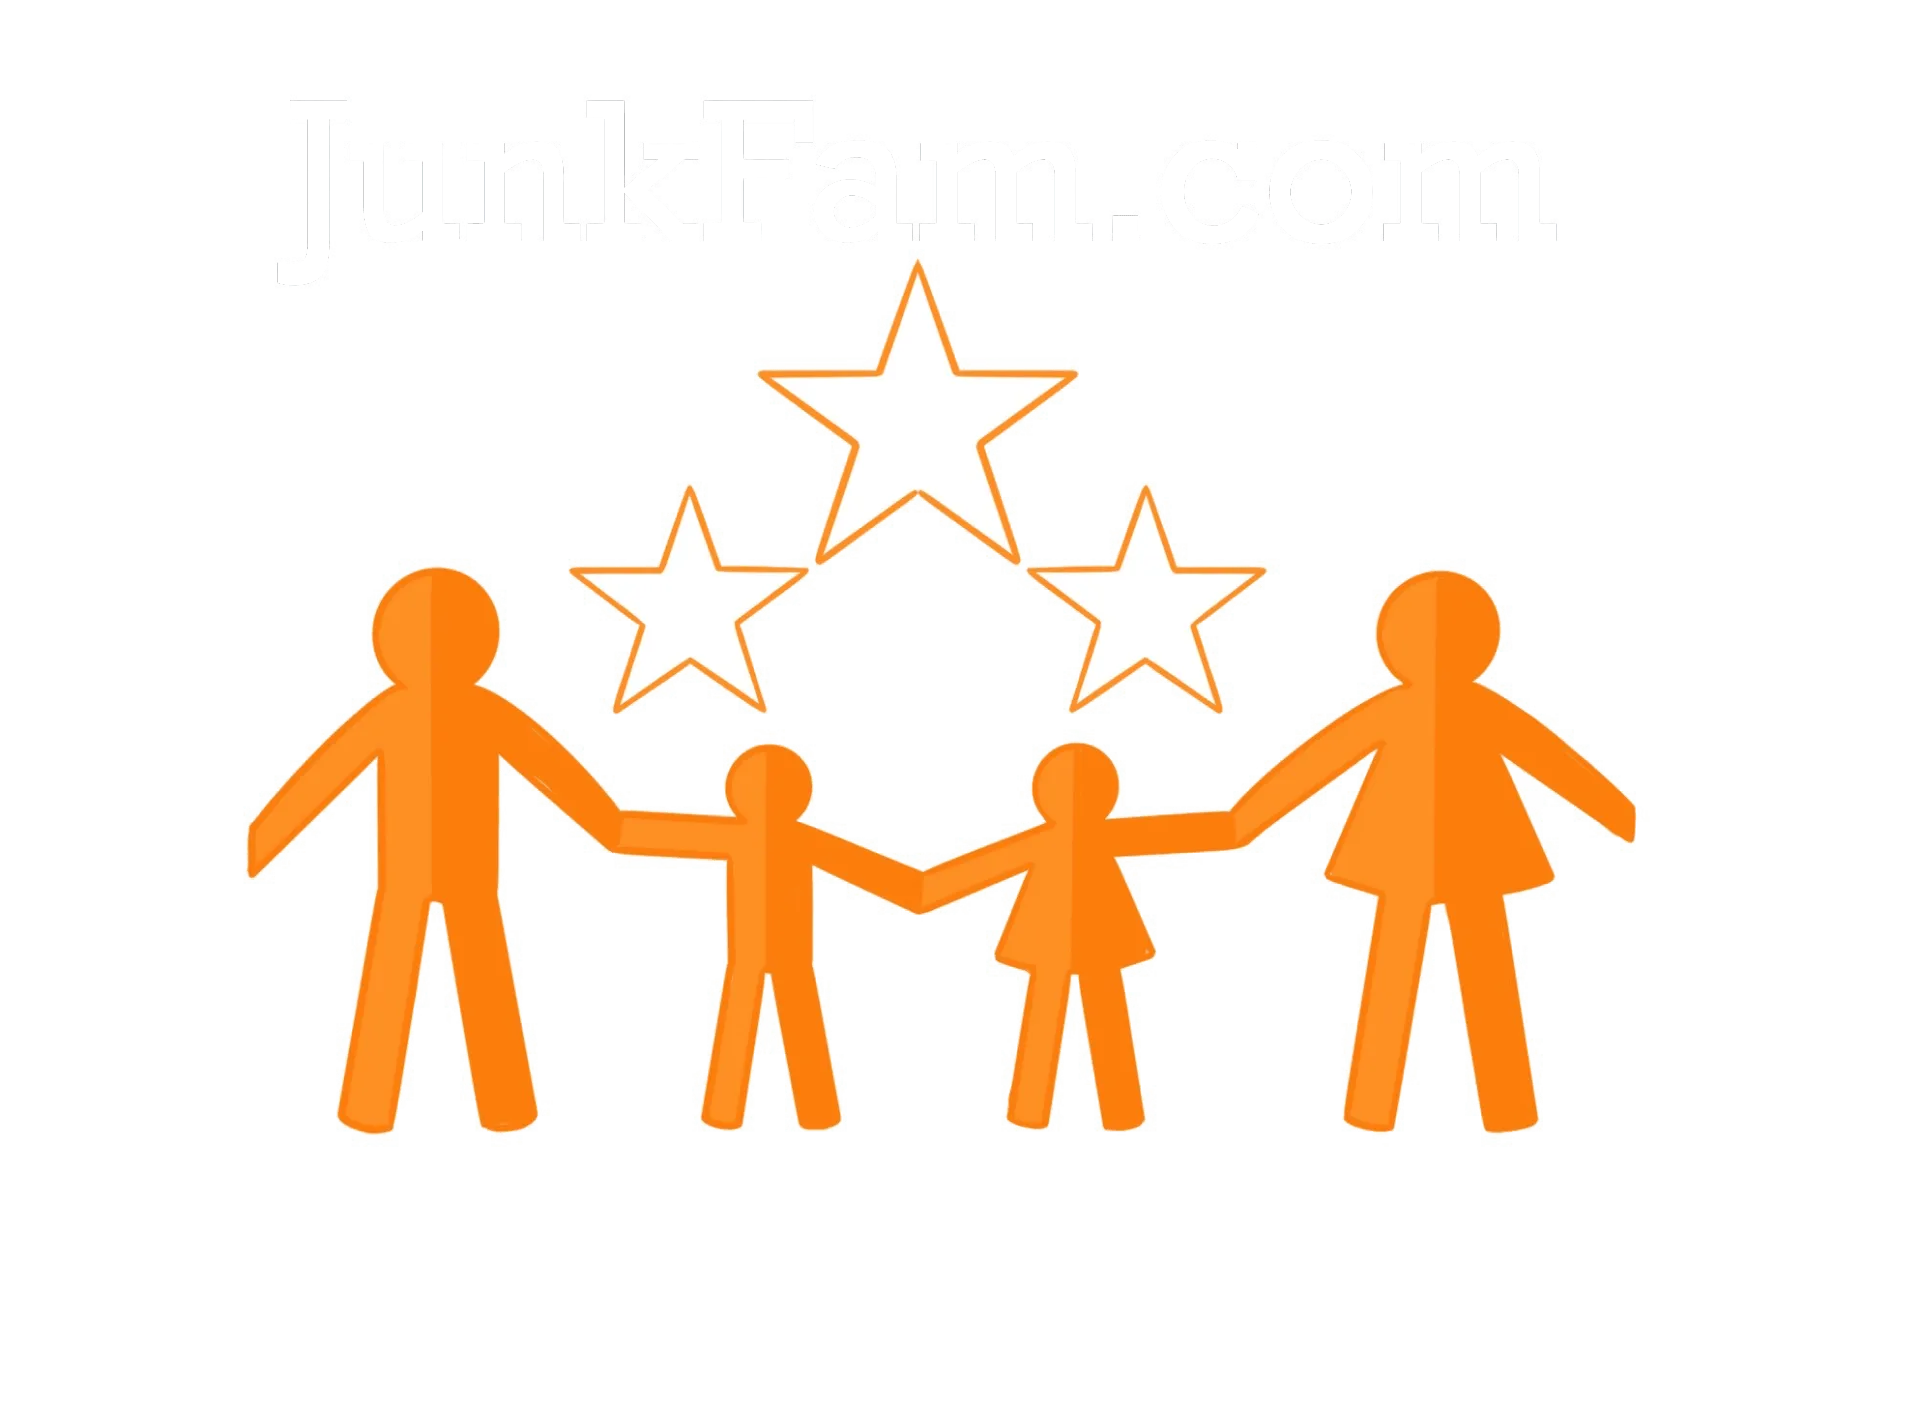 Delaware County Dumpster Rentals logo